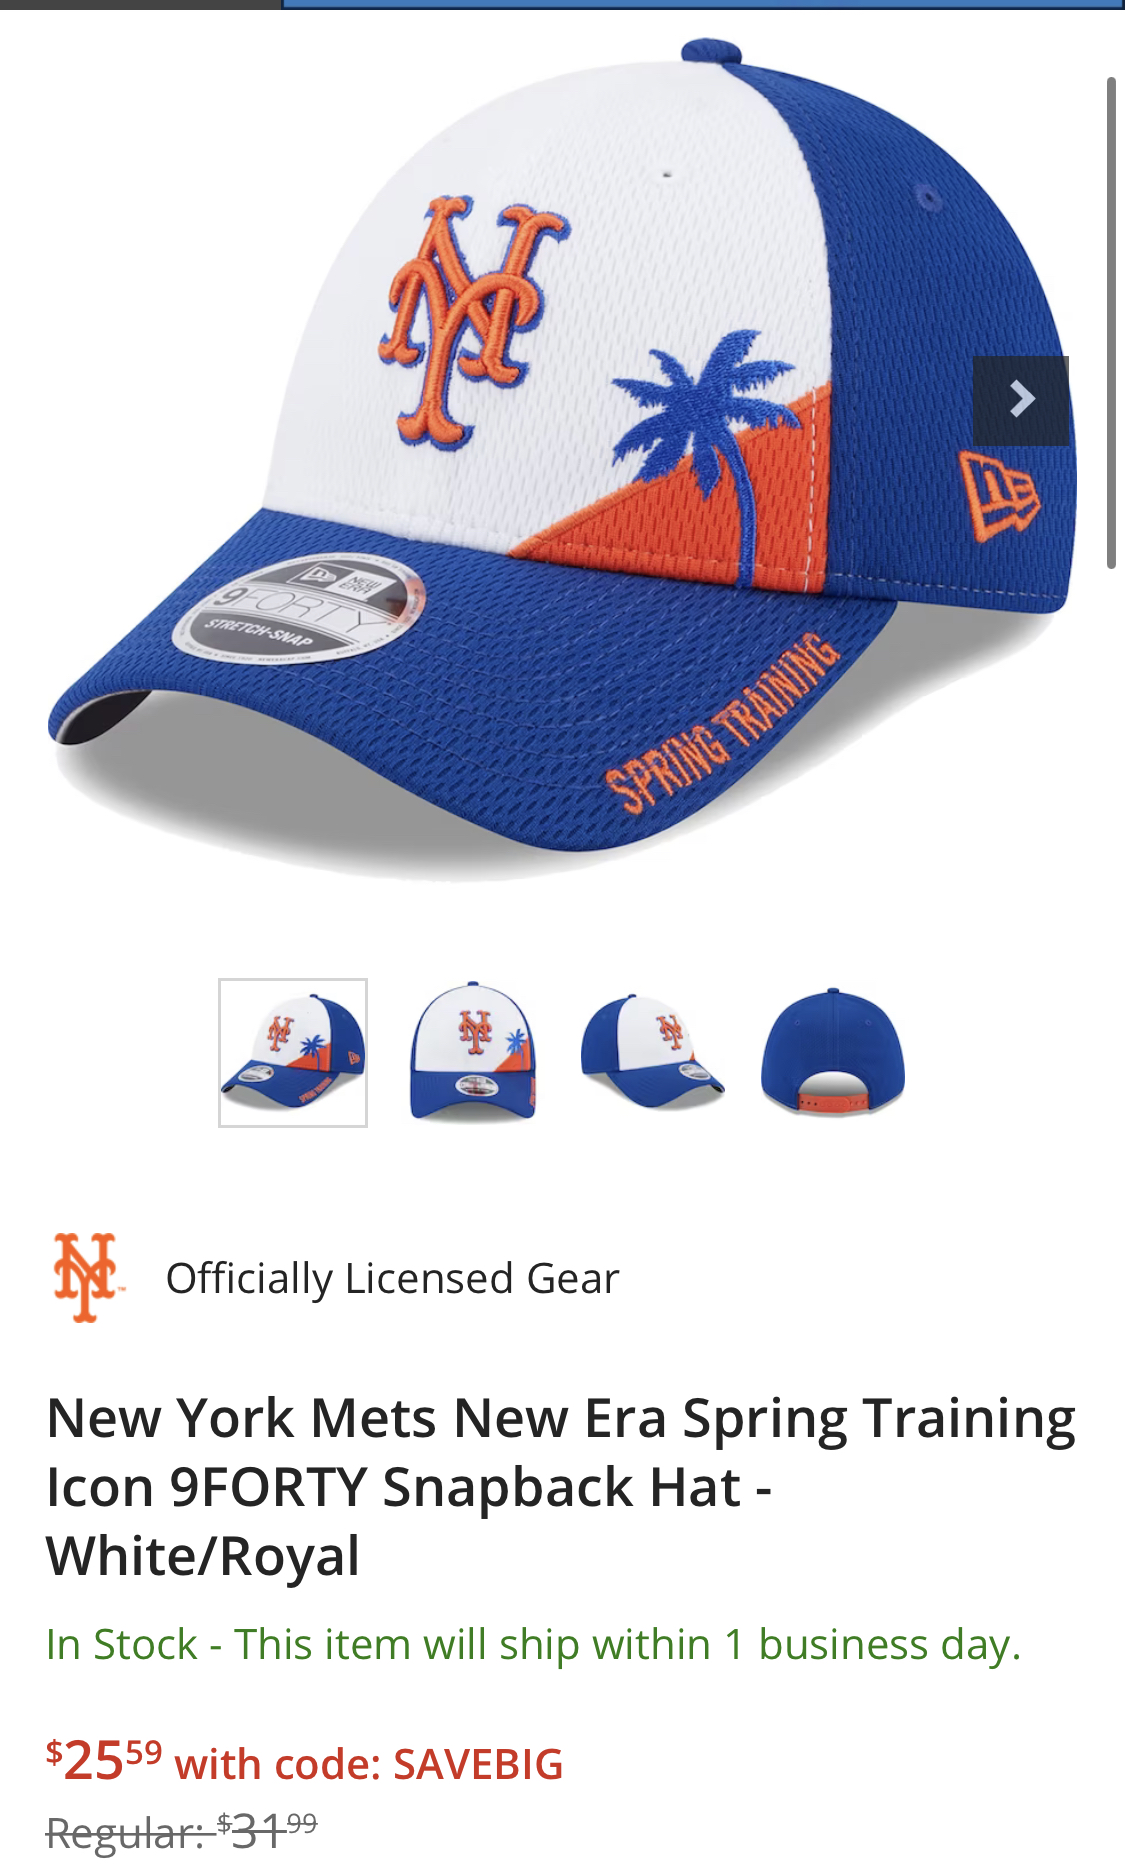 mets spring training hat